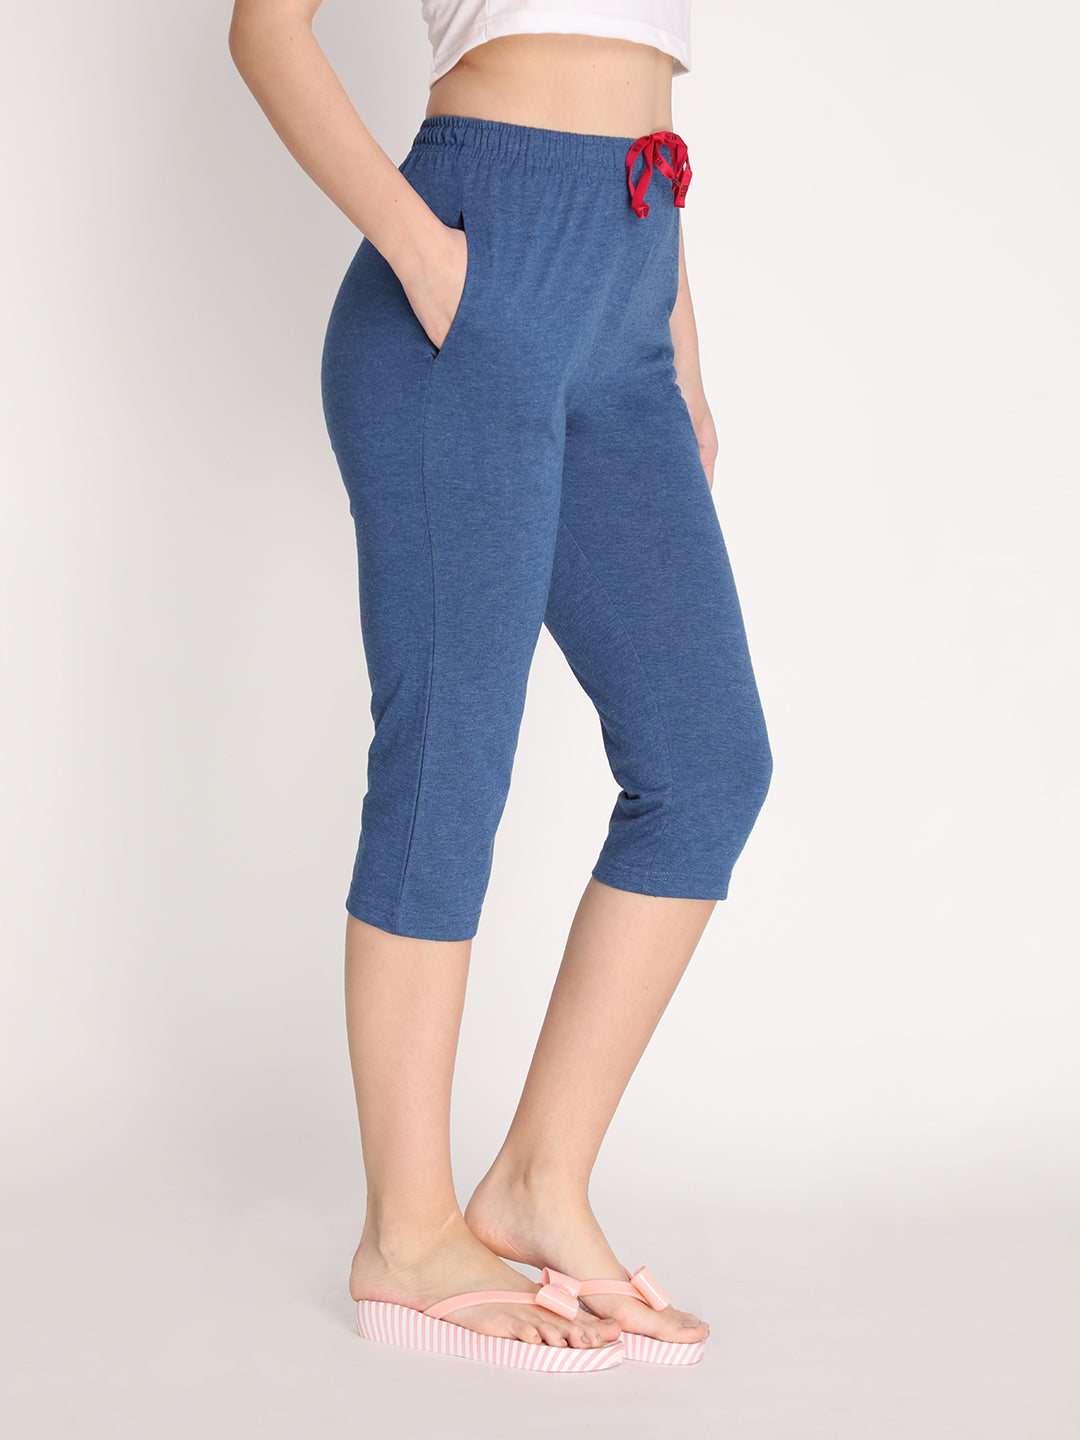 Buy Jockey Stretch Capri Pants-Blue at Rs.849 online | Activewear online